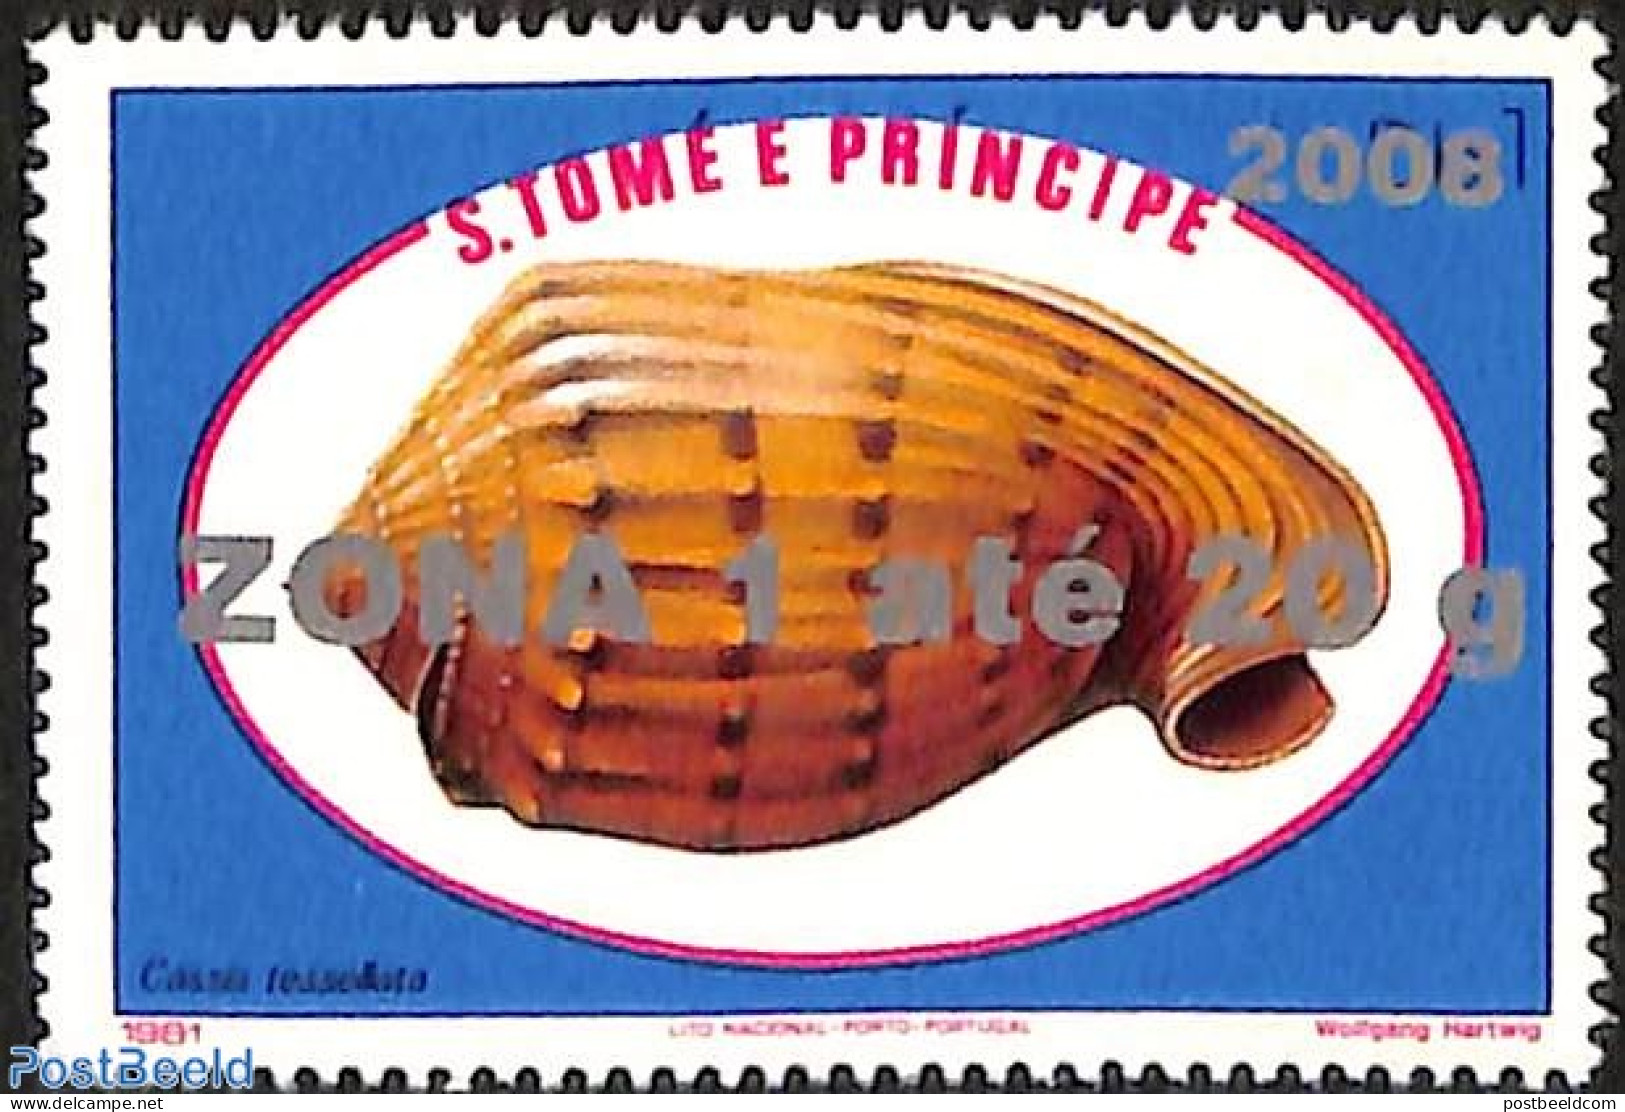 Sao Tome/Principe 2008 Cassis Tessellata Shell, Overprint, Mint NH, Nature - Shells & Crustaceans - Maritiem Leven